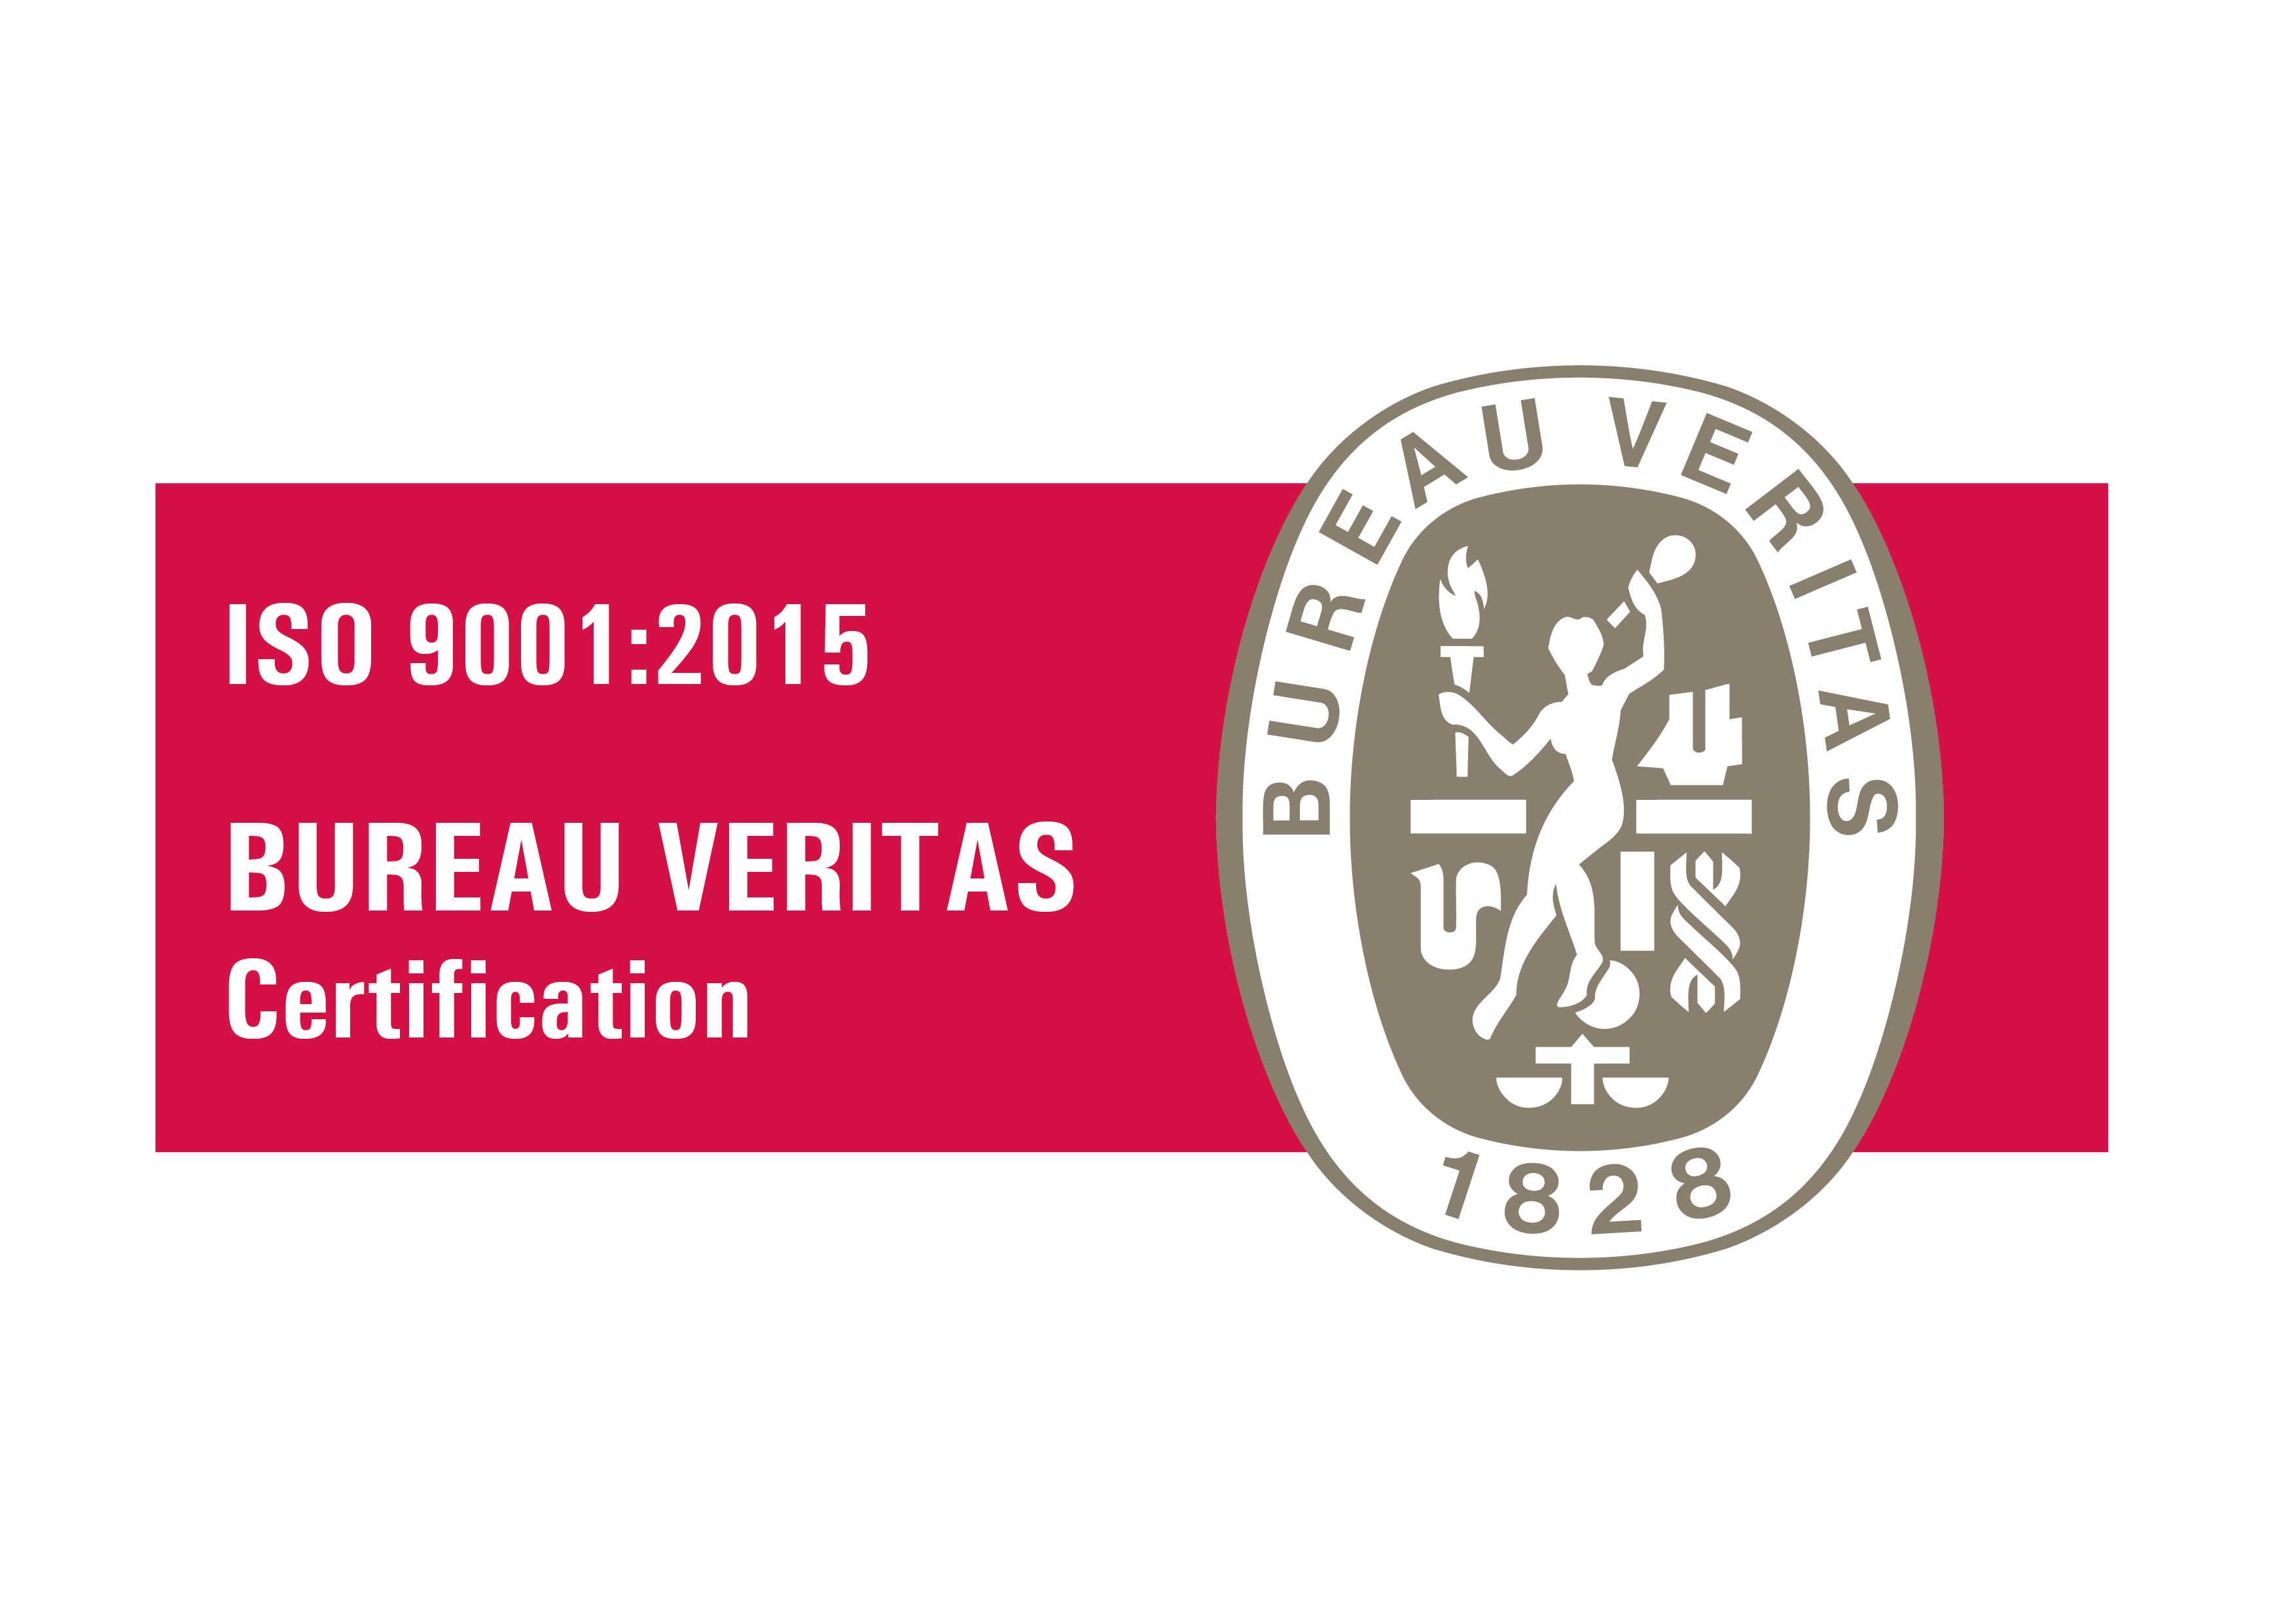 Vortex Fire Dubai awarded ISO 9001:2015 certification